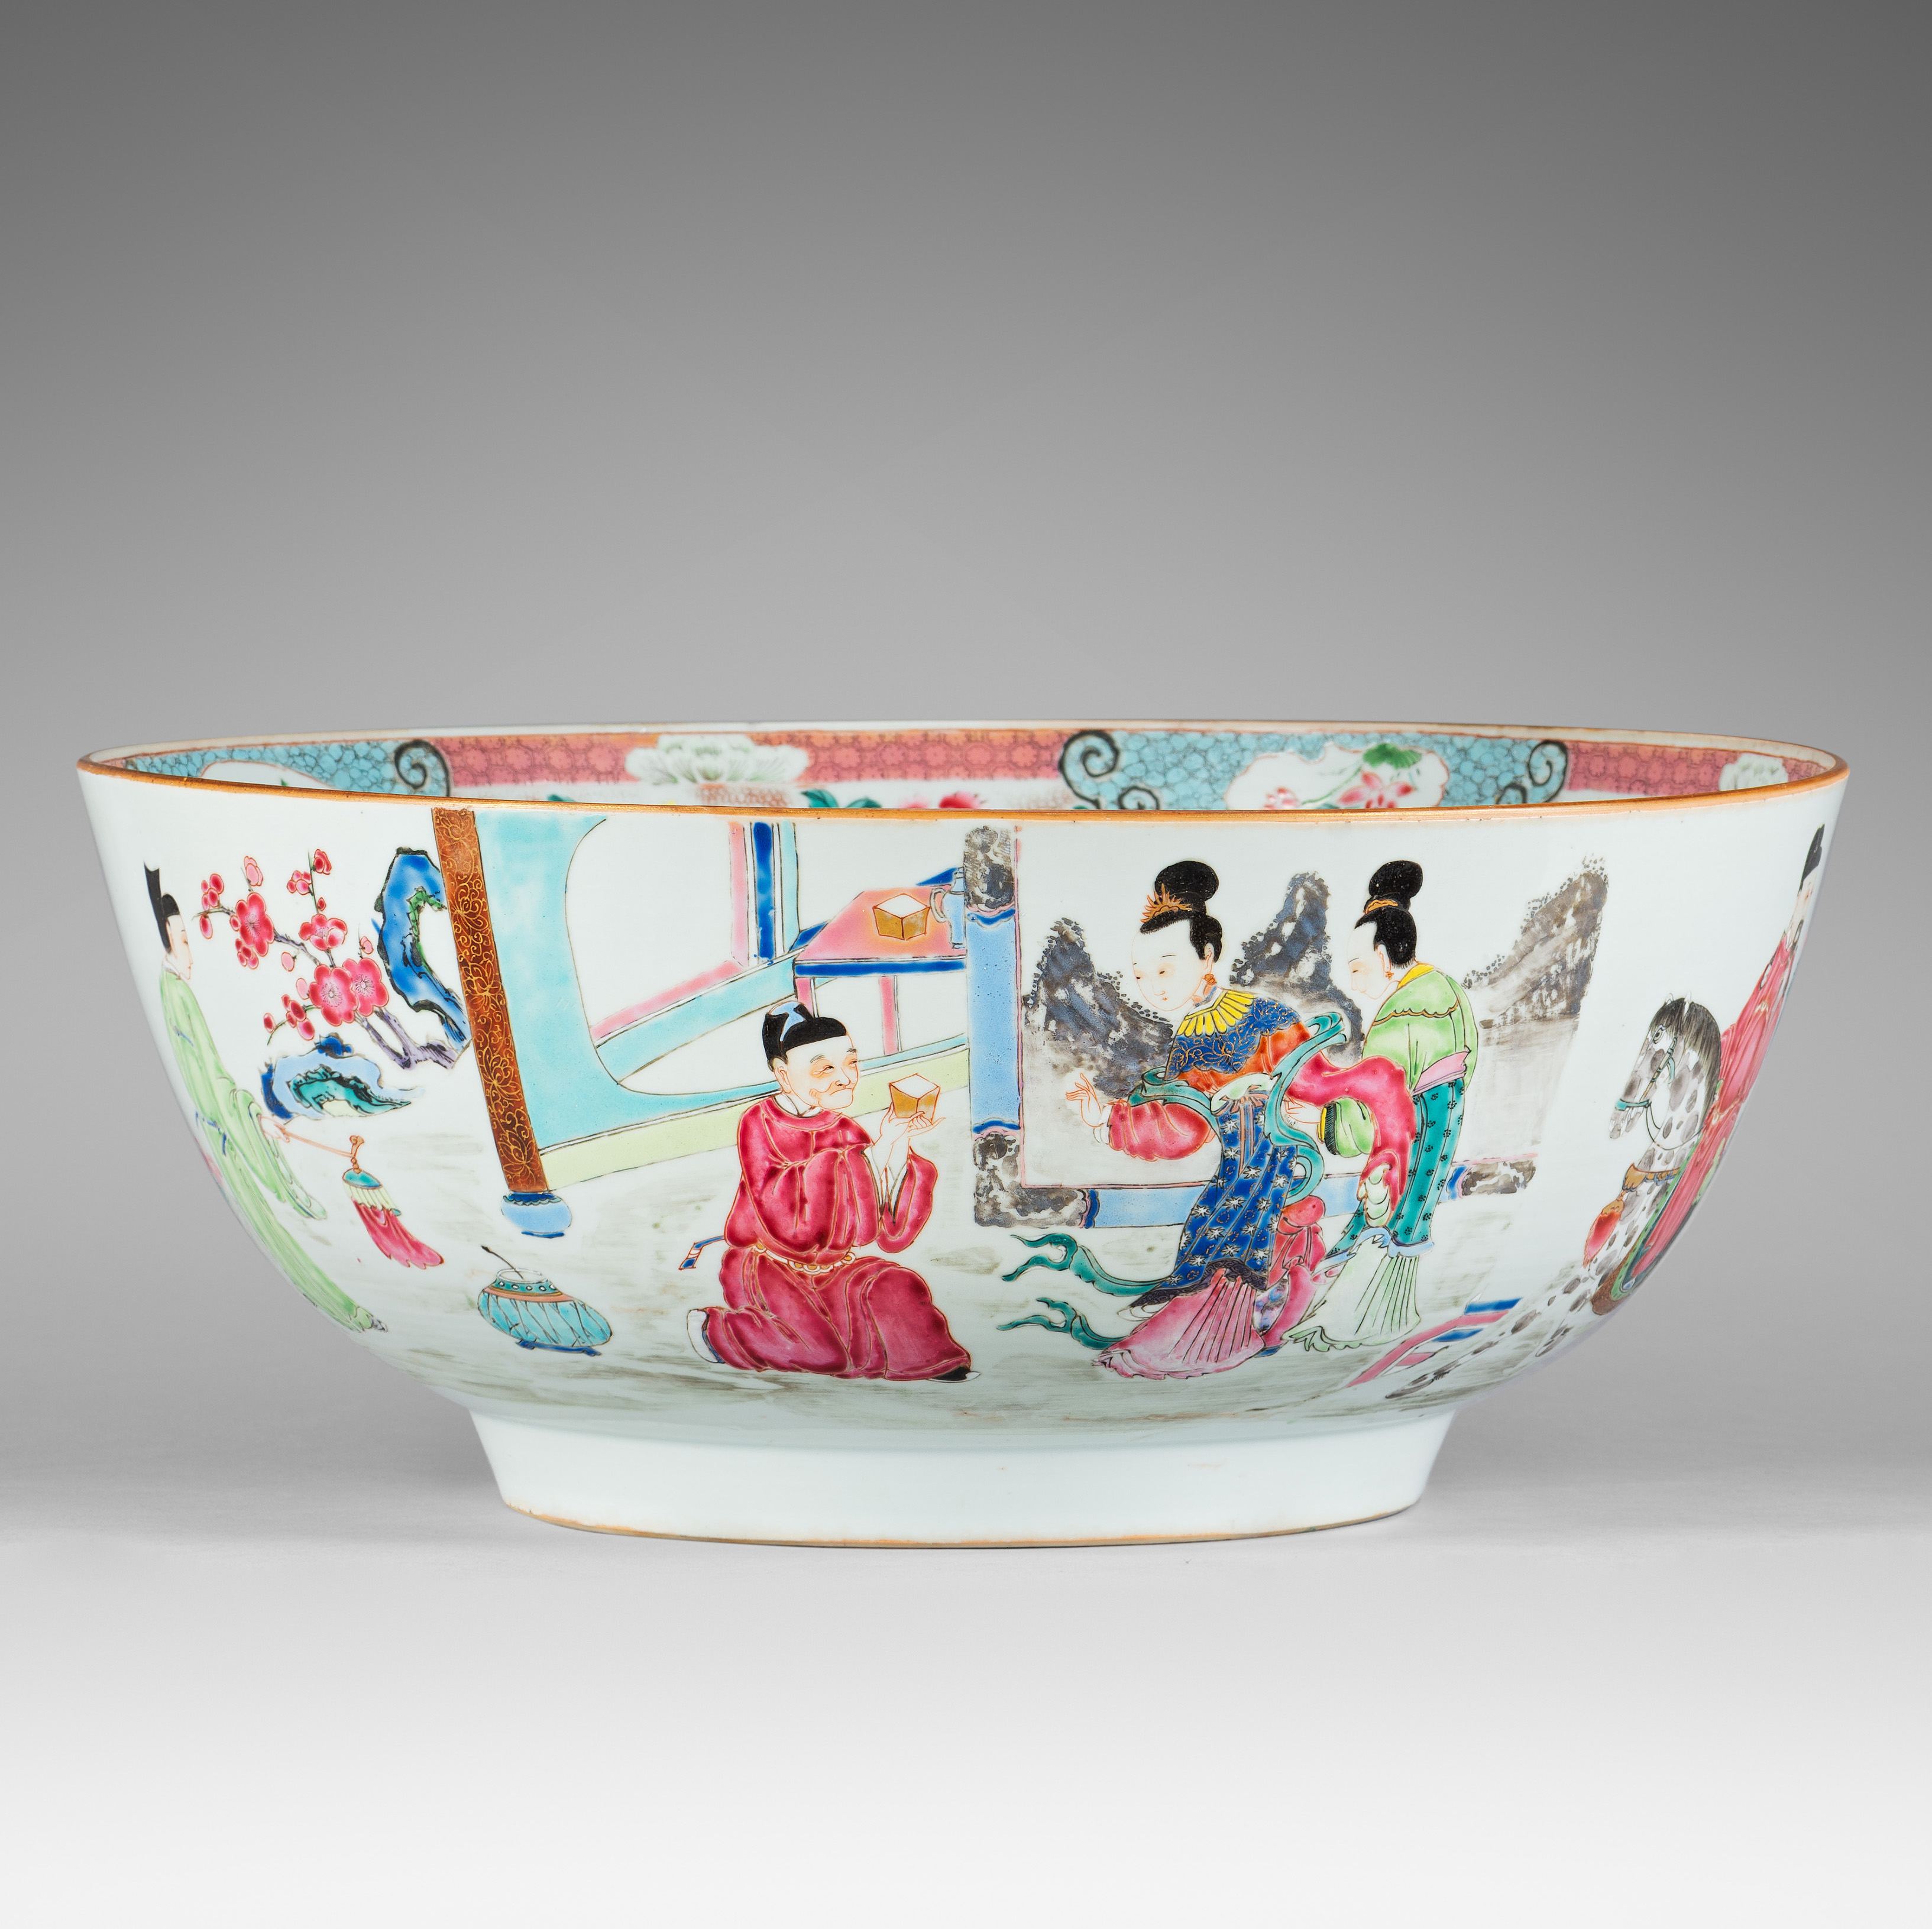 Famille rose Porcelain Yongzheng period (1723-1735), circa 1730/1735, China